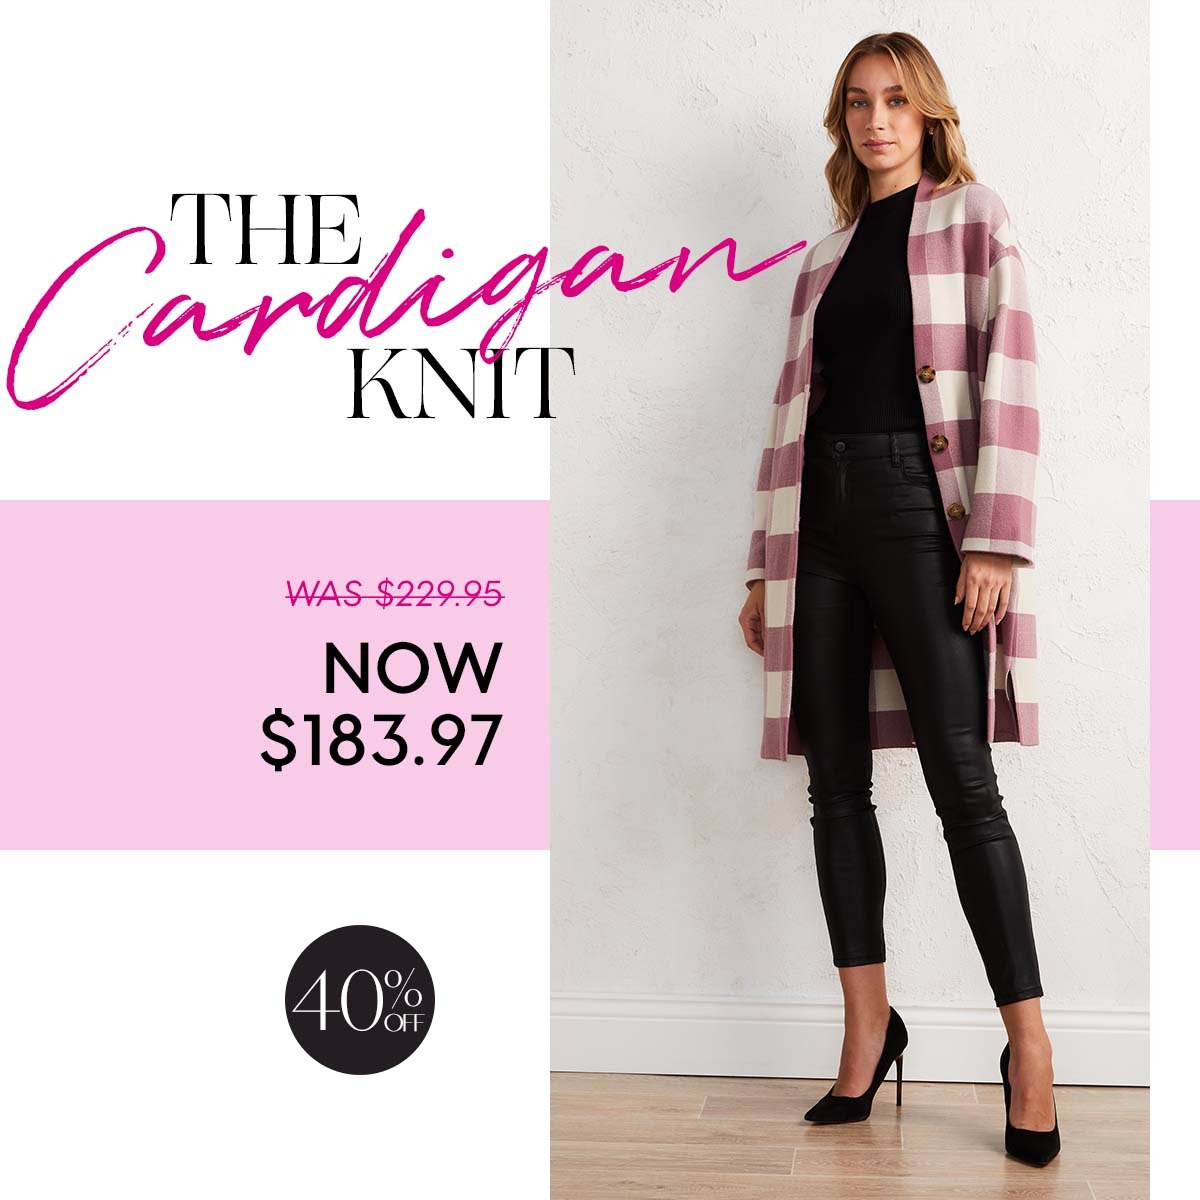 The Cardigan Knit.